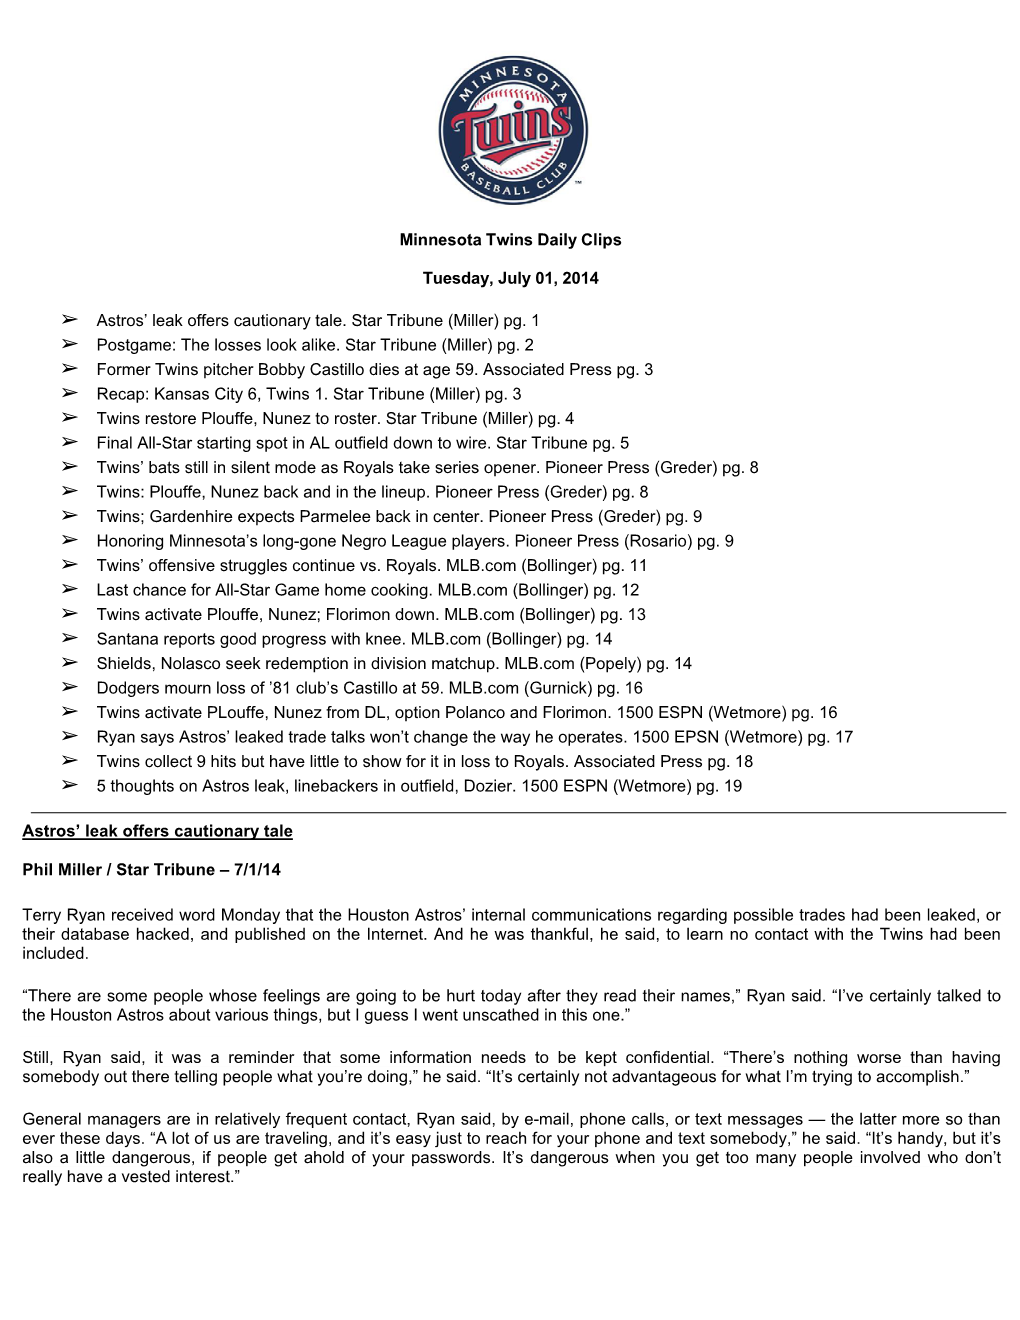 Minnesota Twins Daily Clips Tuesday, July 01, 2014 Astros' Leak Offers Cautionary Tale. Star Tribune